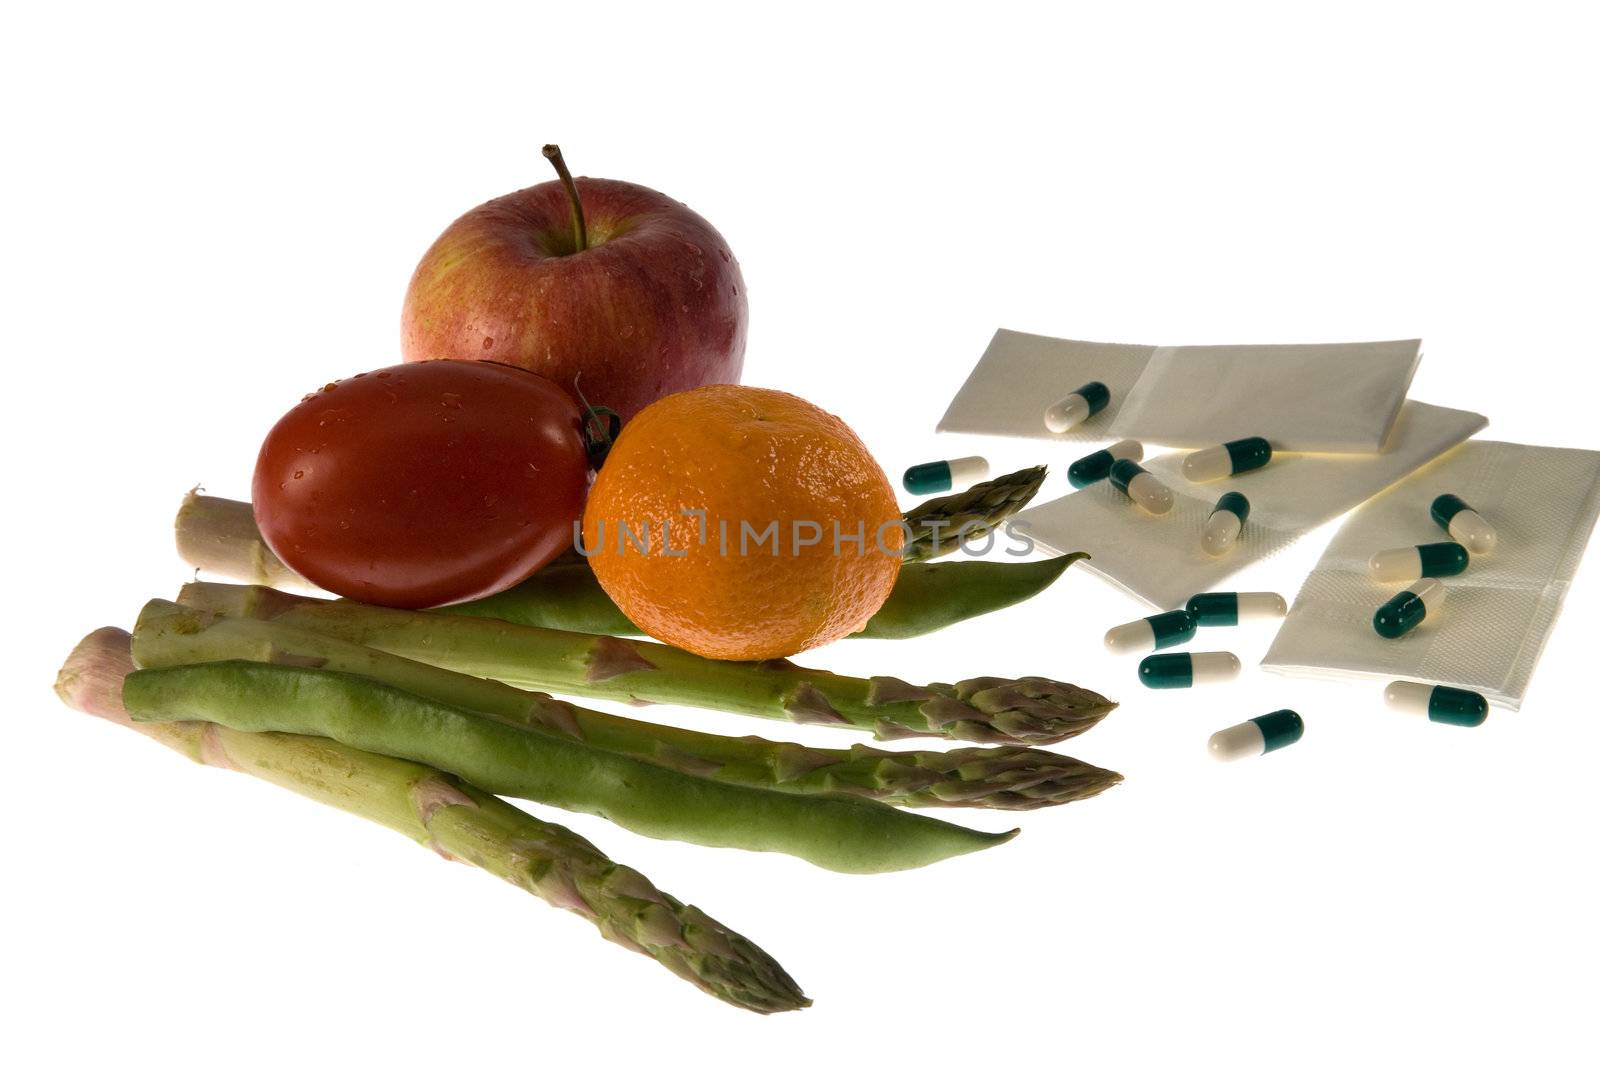 Fruits, vegetables, medicaments and handkerchiefs representing health care.